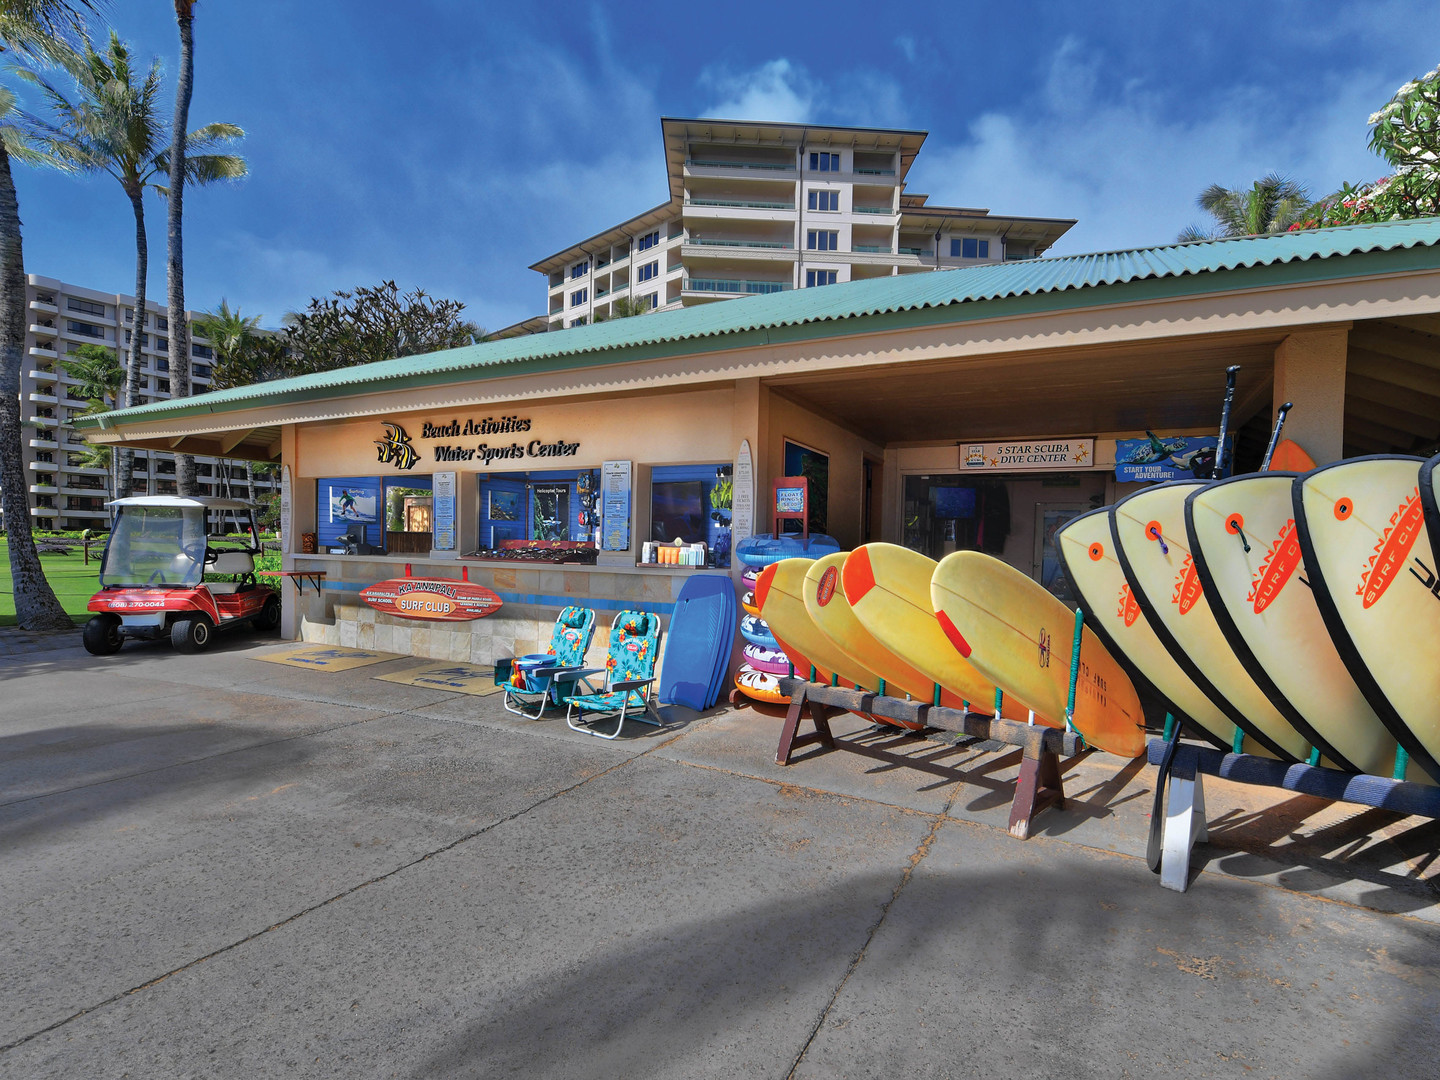 Marriott's Maui Ocean Club - Molokai, Maui, and Lanai Towers Water Sports Center. Marriott's Maui Ocean Club - Molokai, Maui, and Lanai Towers is located in Lāhainā, Maui, Hawai‘i United States.